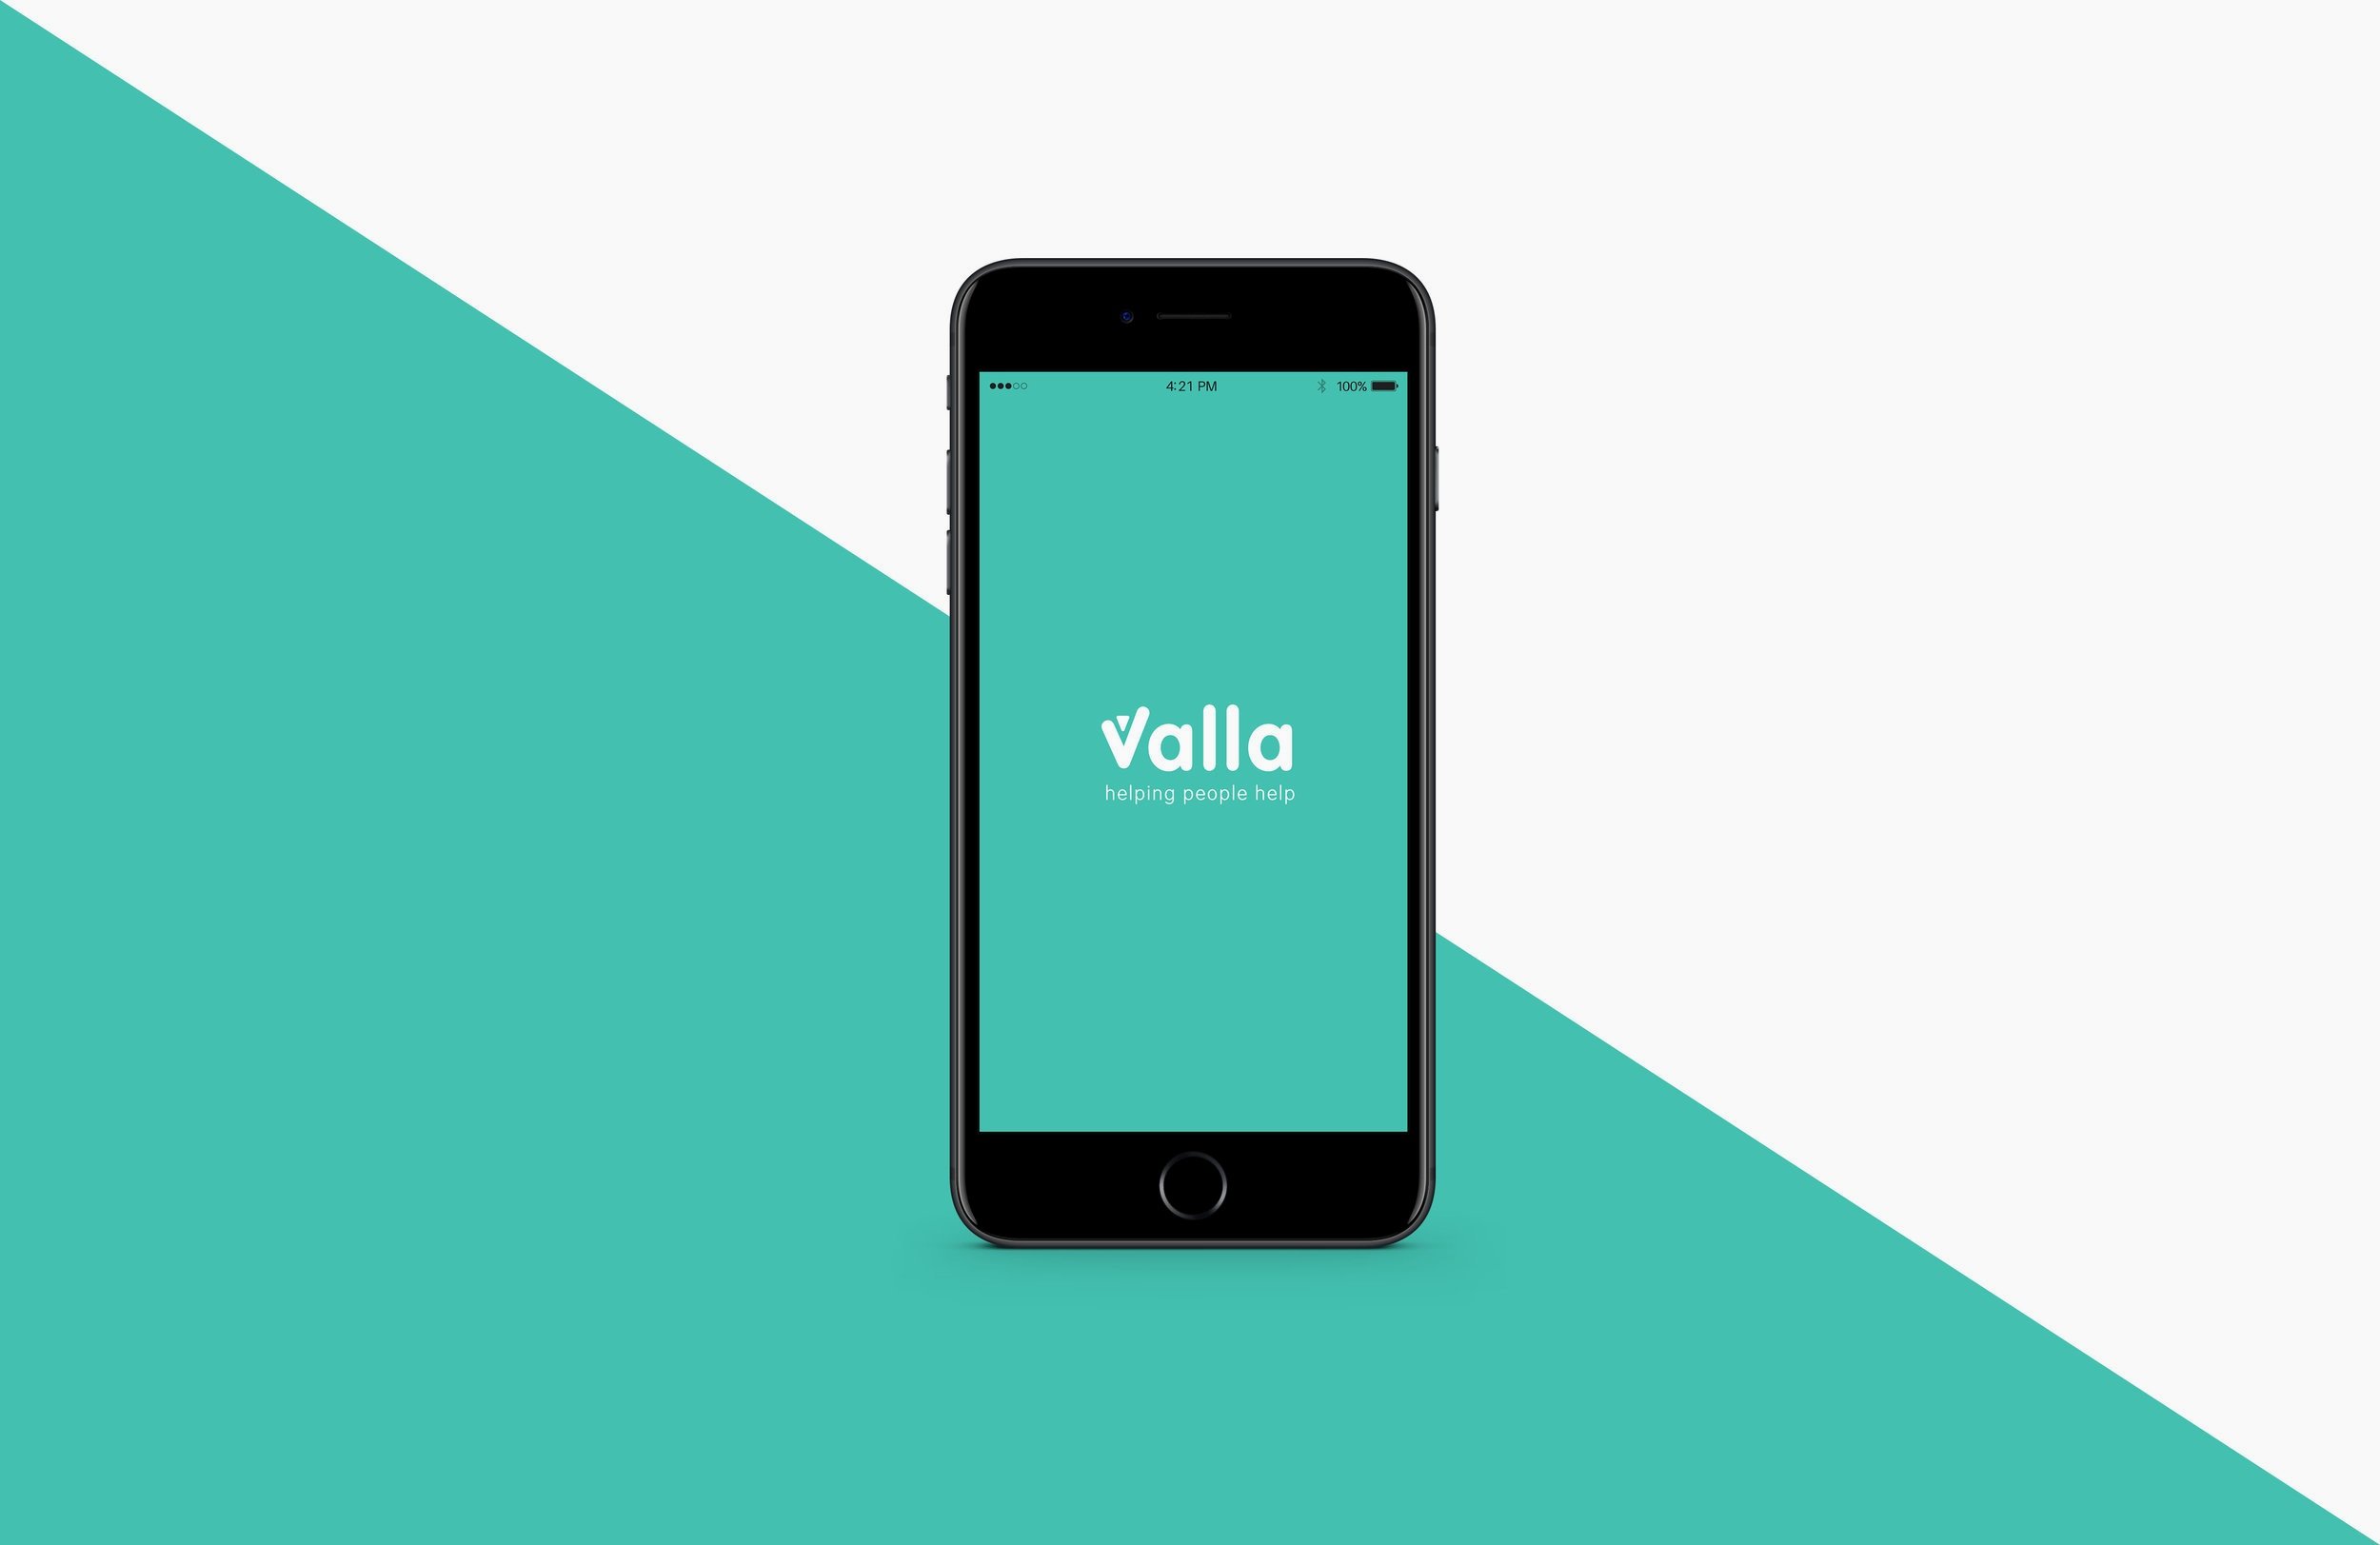 Freelance-graphic-designer-An Apple iPhone showing Valla user interface design